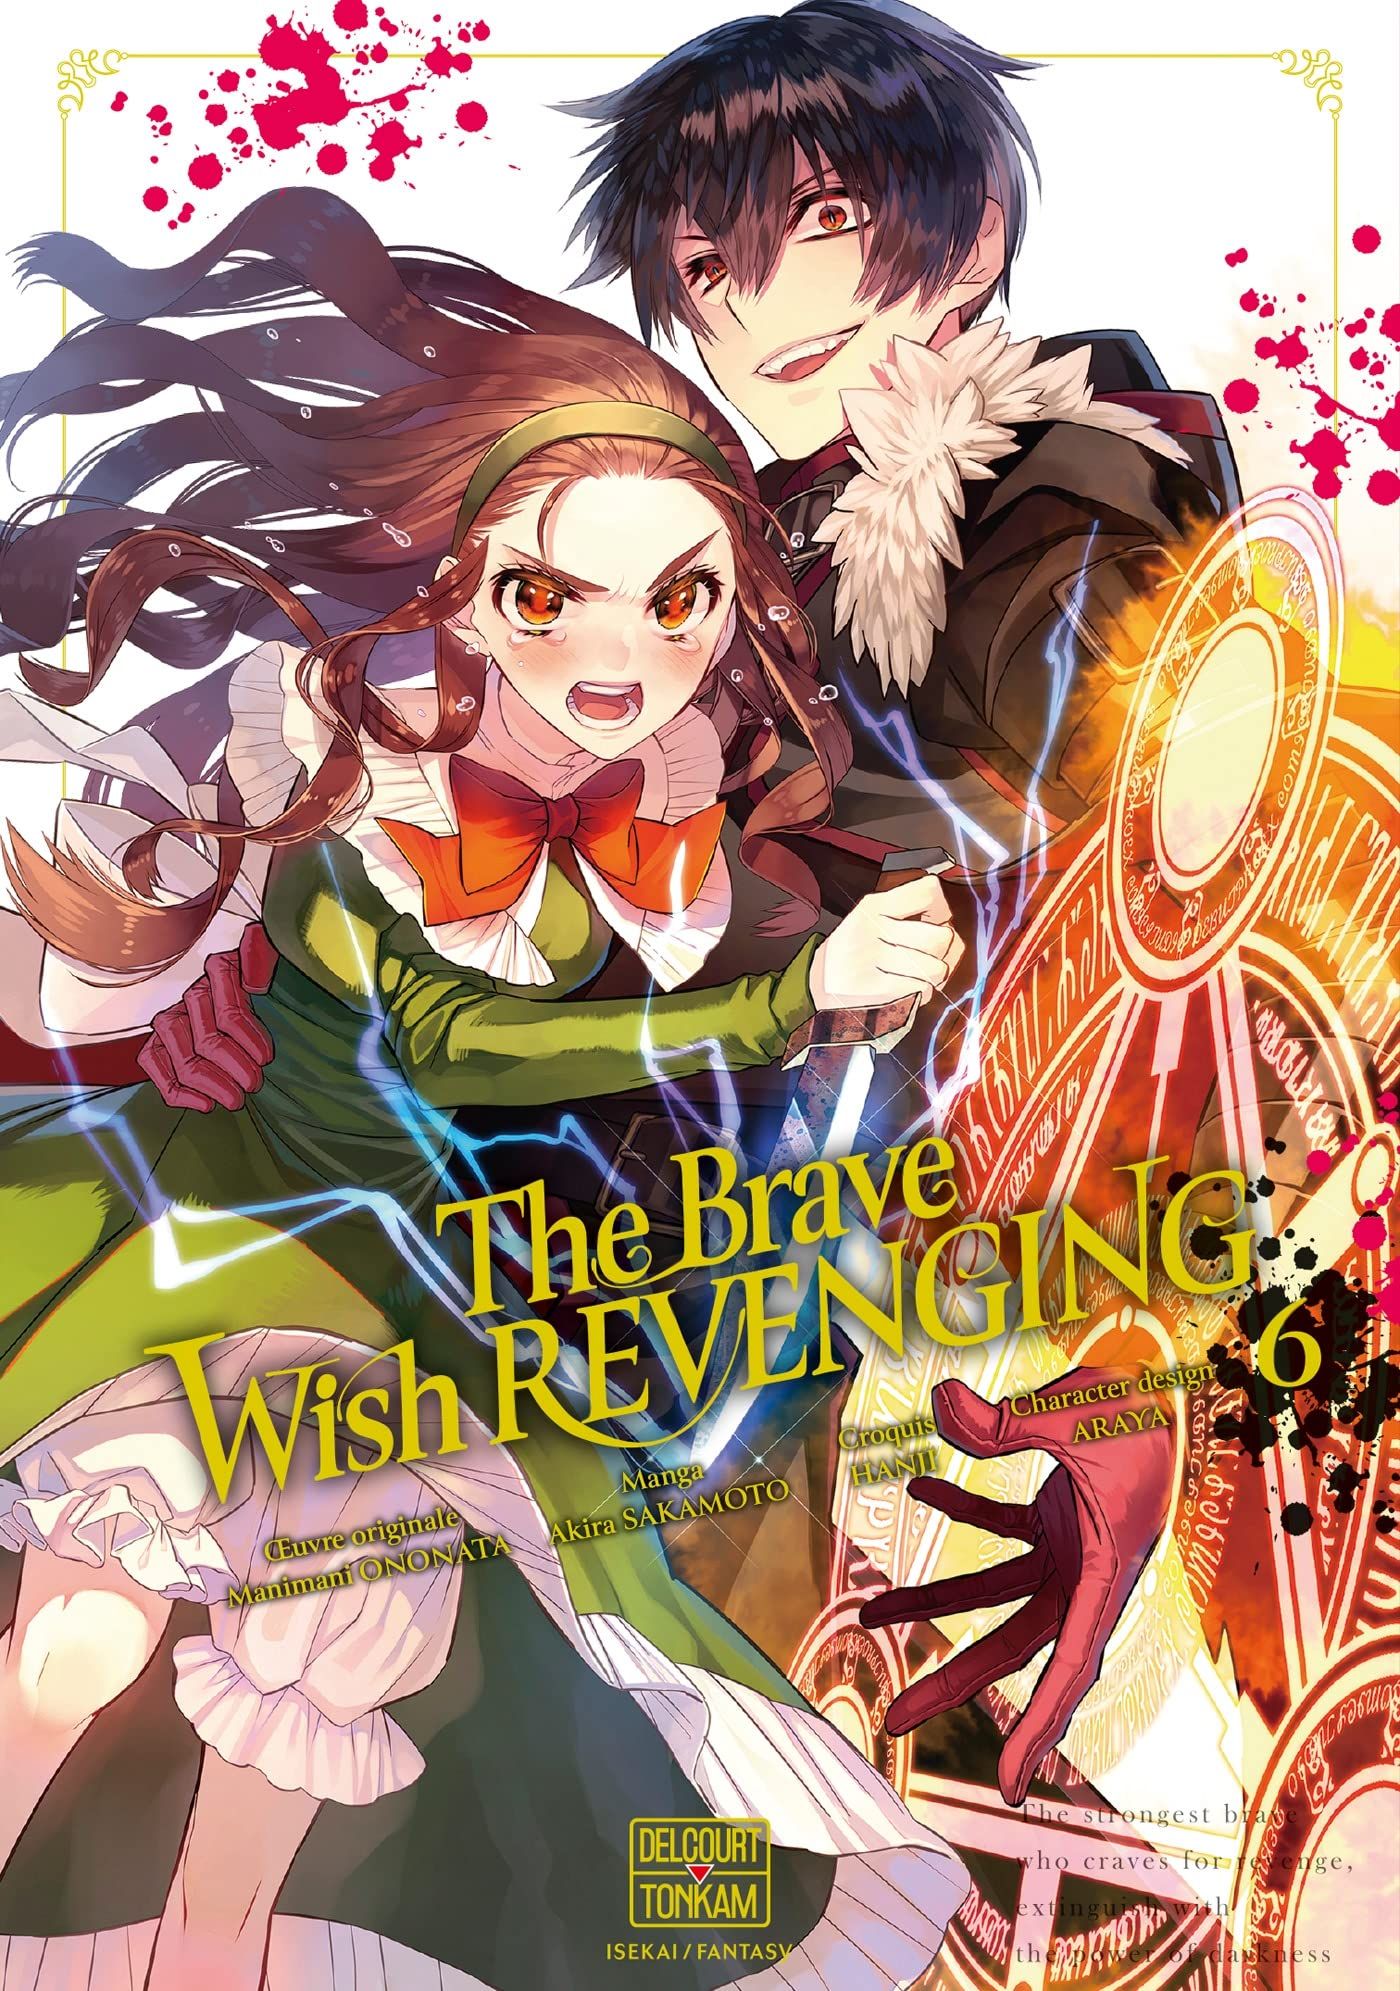 The Brave wish revenging Vol.6